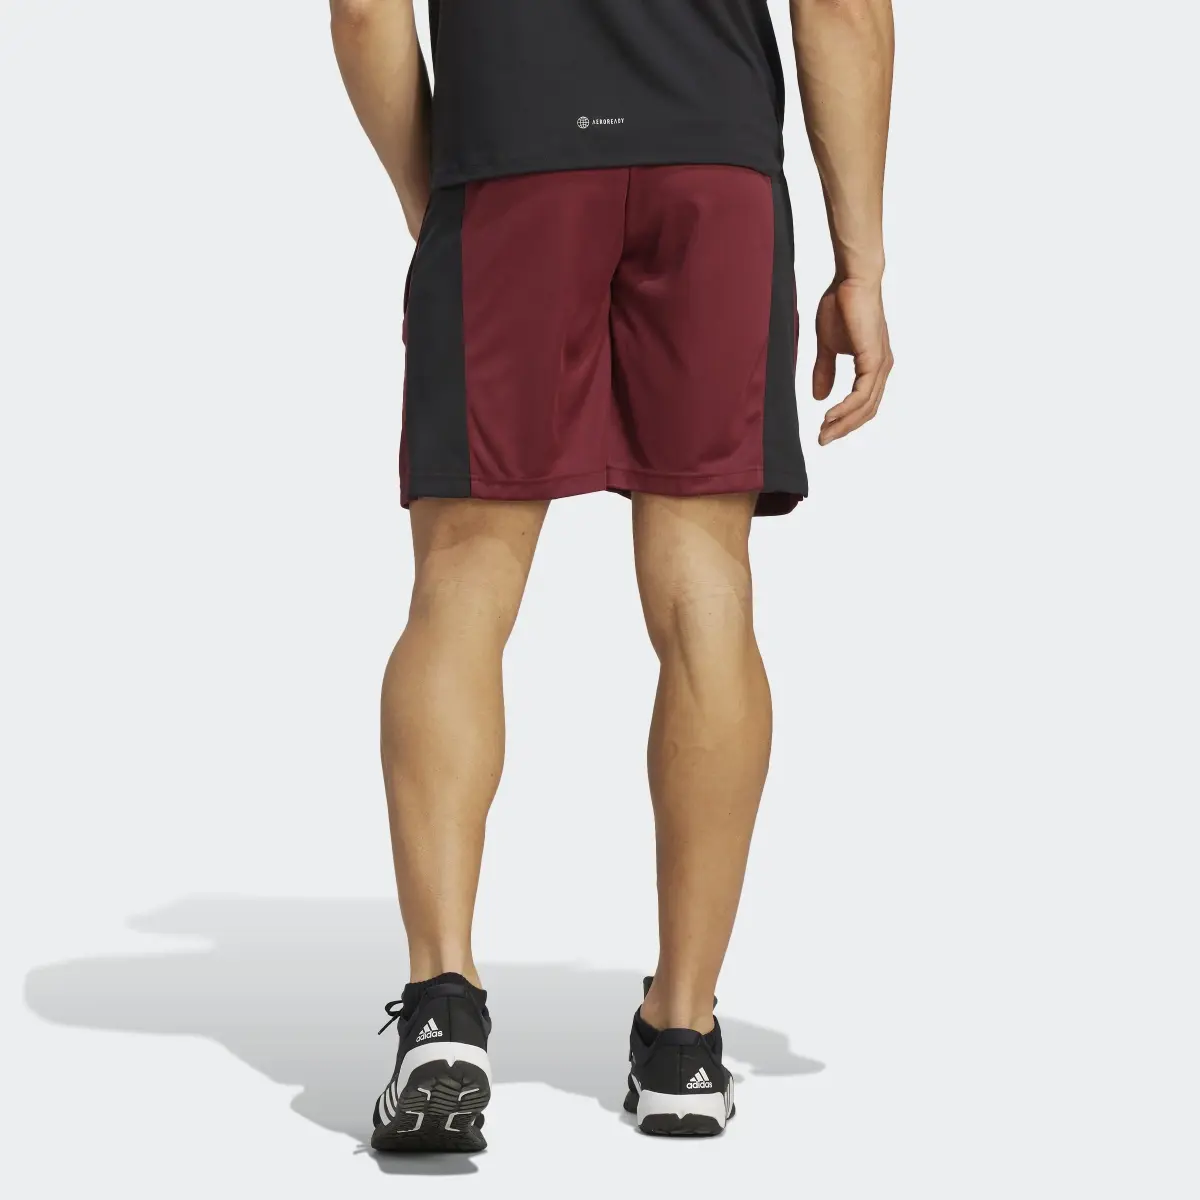 Adidas Train Essentials Seasonal Camo Shorts. 2